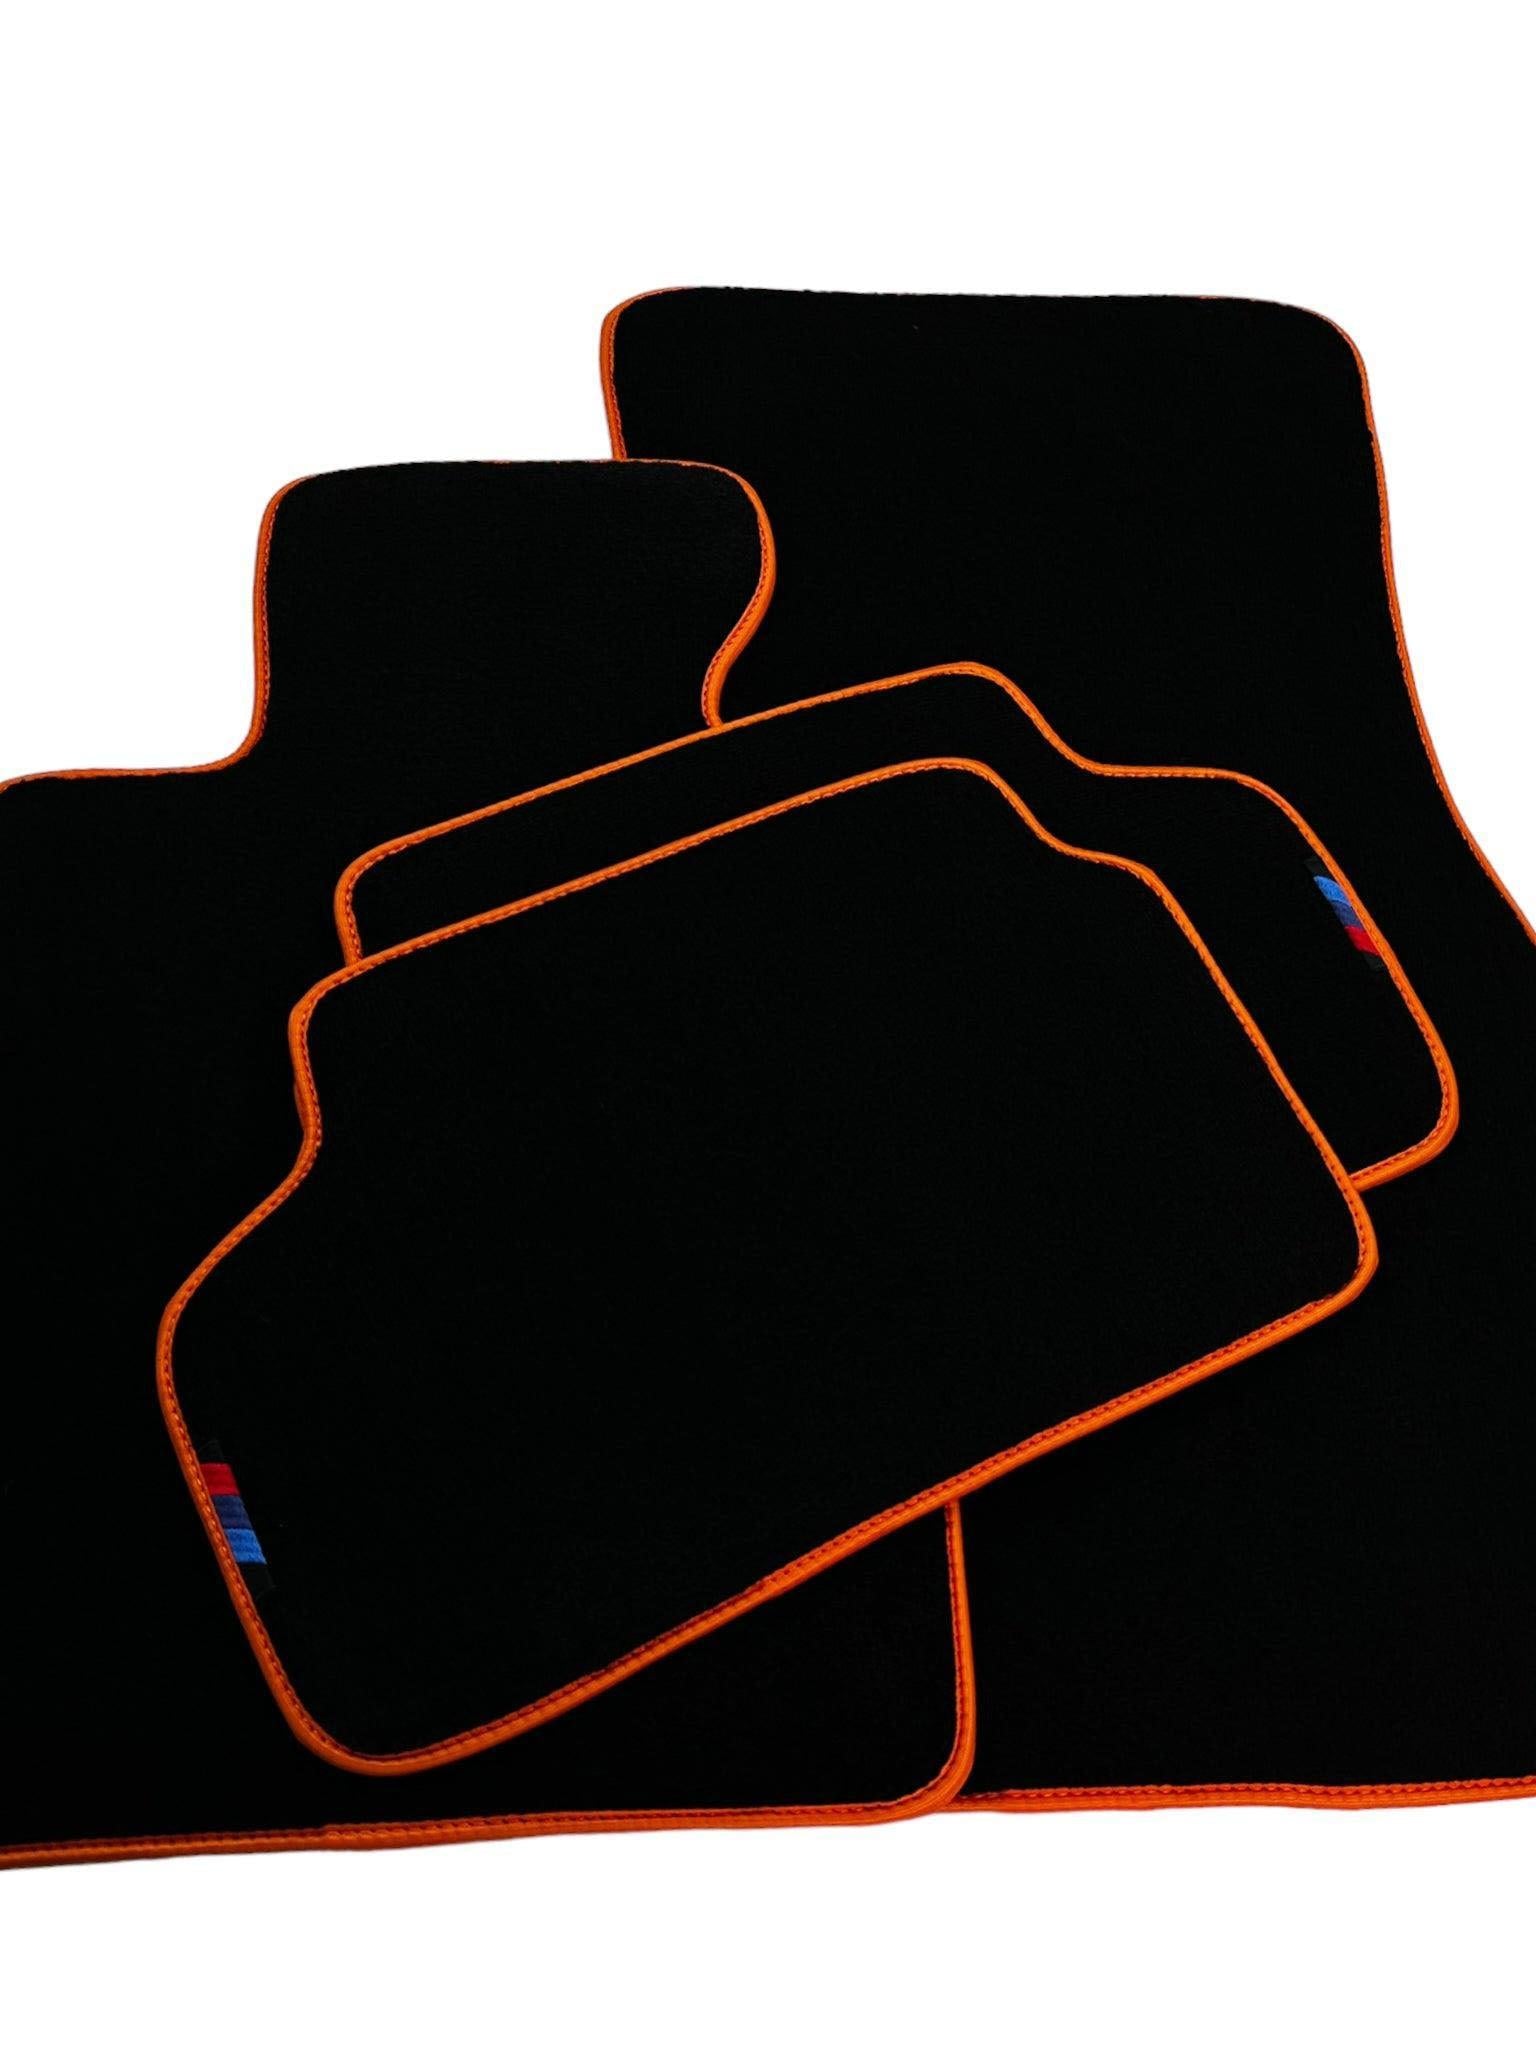 Black Floor Floor Mats For BMW 7 Series E66 | Fighter Jet Edition AutoWin Brand |Orange Trim